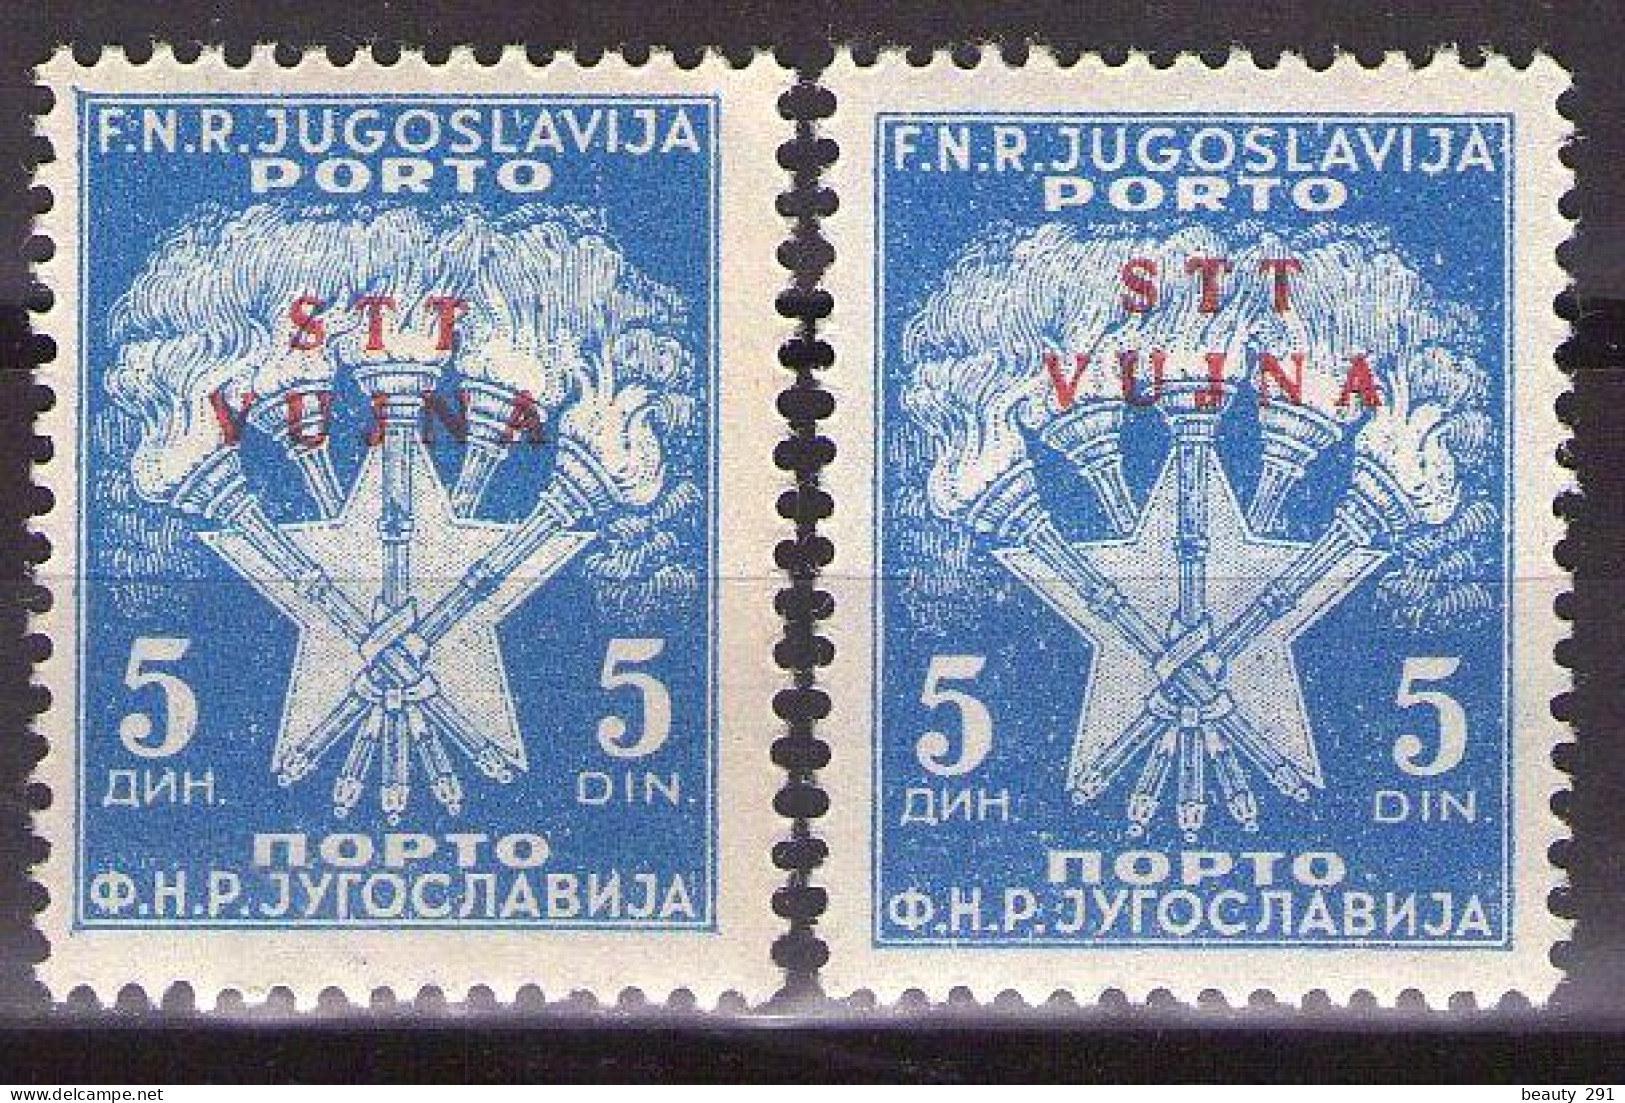 ITALIA - Trieste-Zona B -1952 - Mi 13 X 2 - POSTAGE DUE - MNH**VF - Taxe